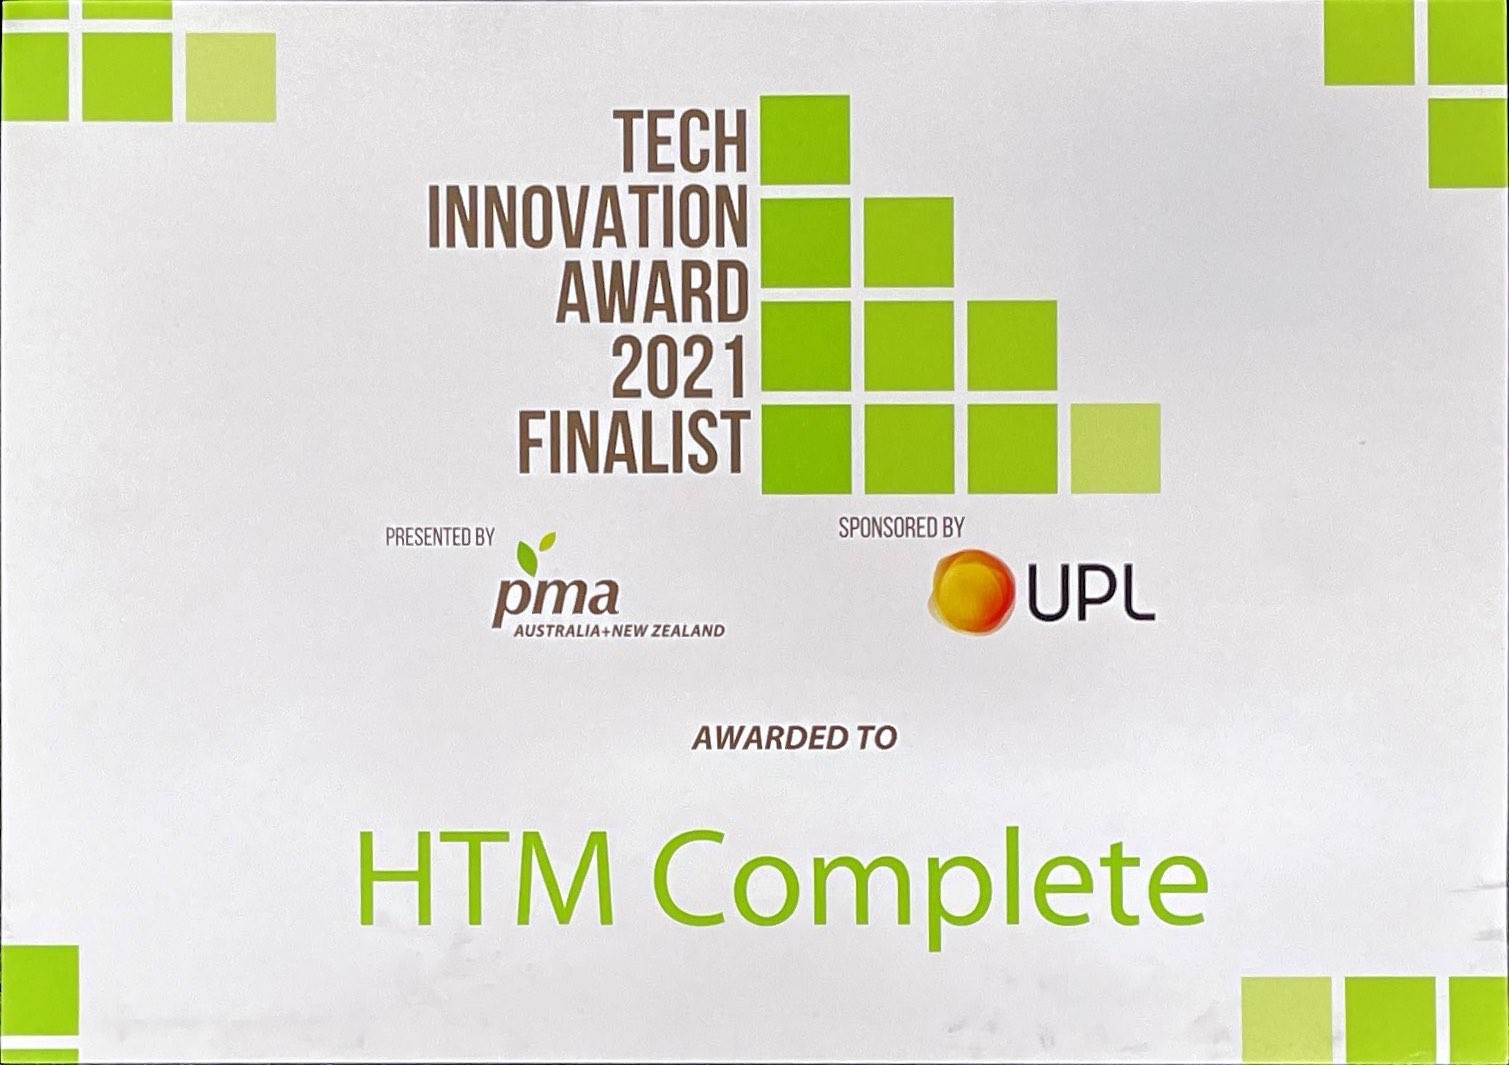 Tech Innovation Award 2021 finalist